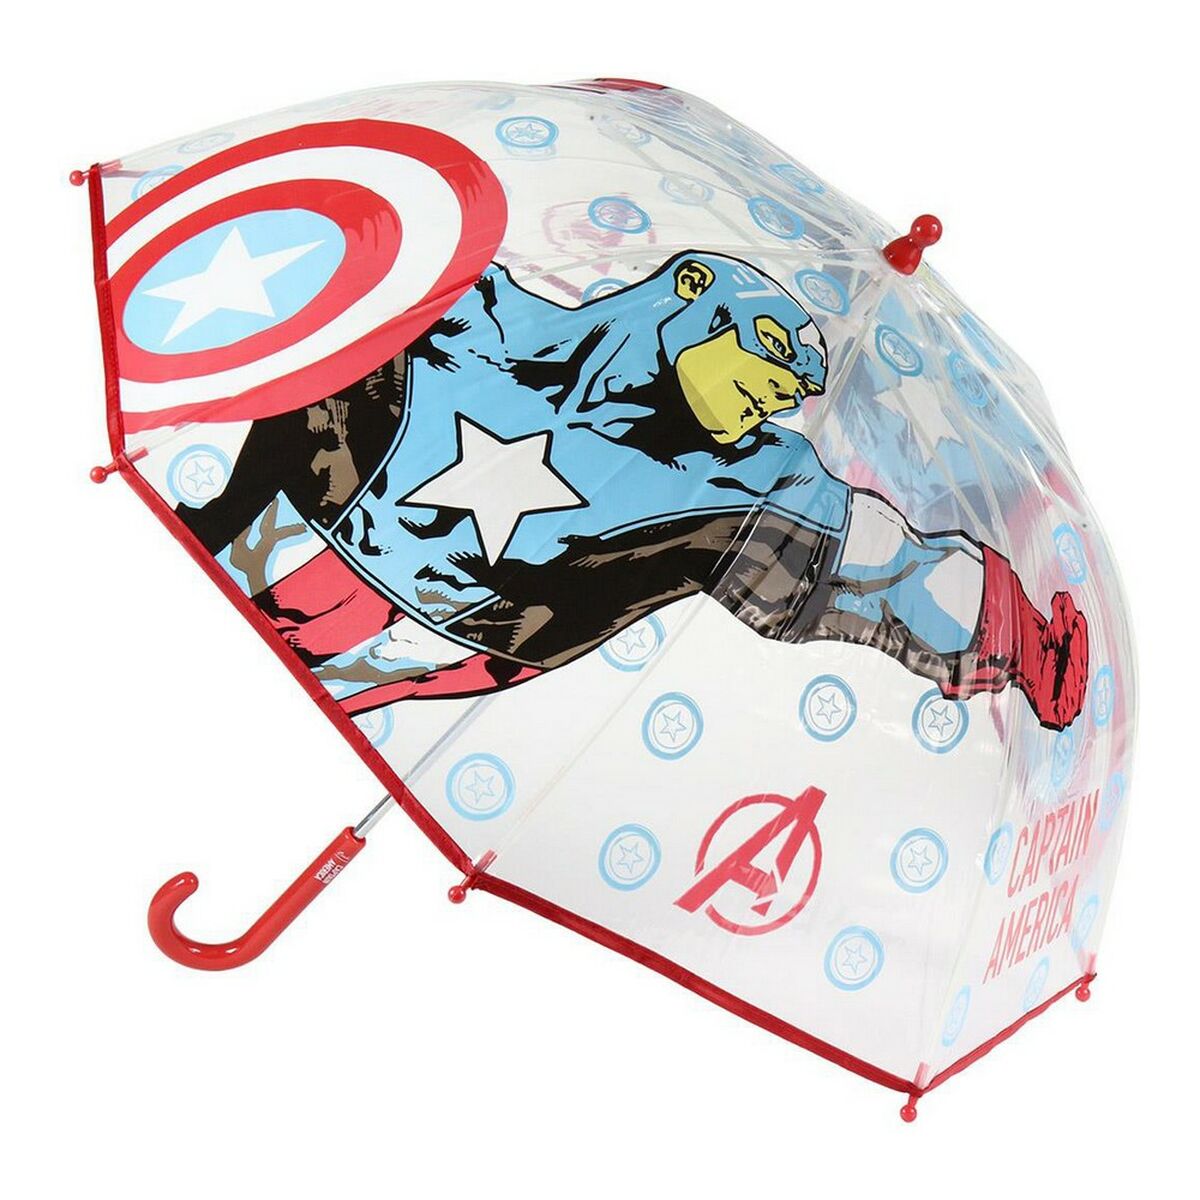 Paraplu The Avengers Rood (Ø 71 cm)